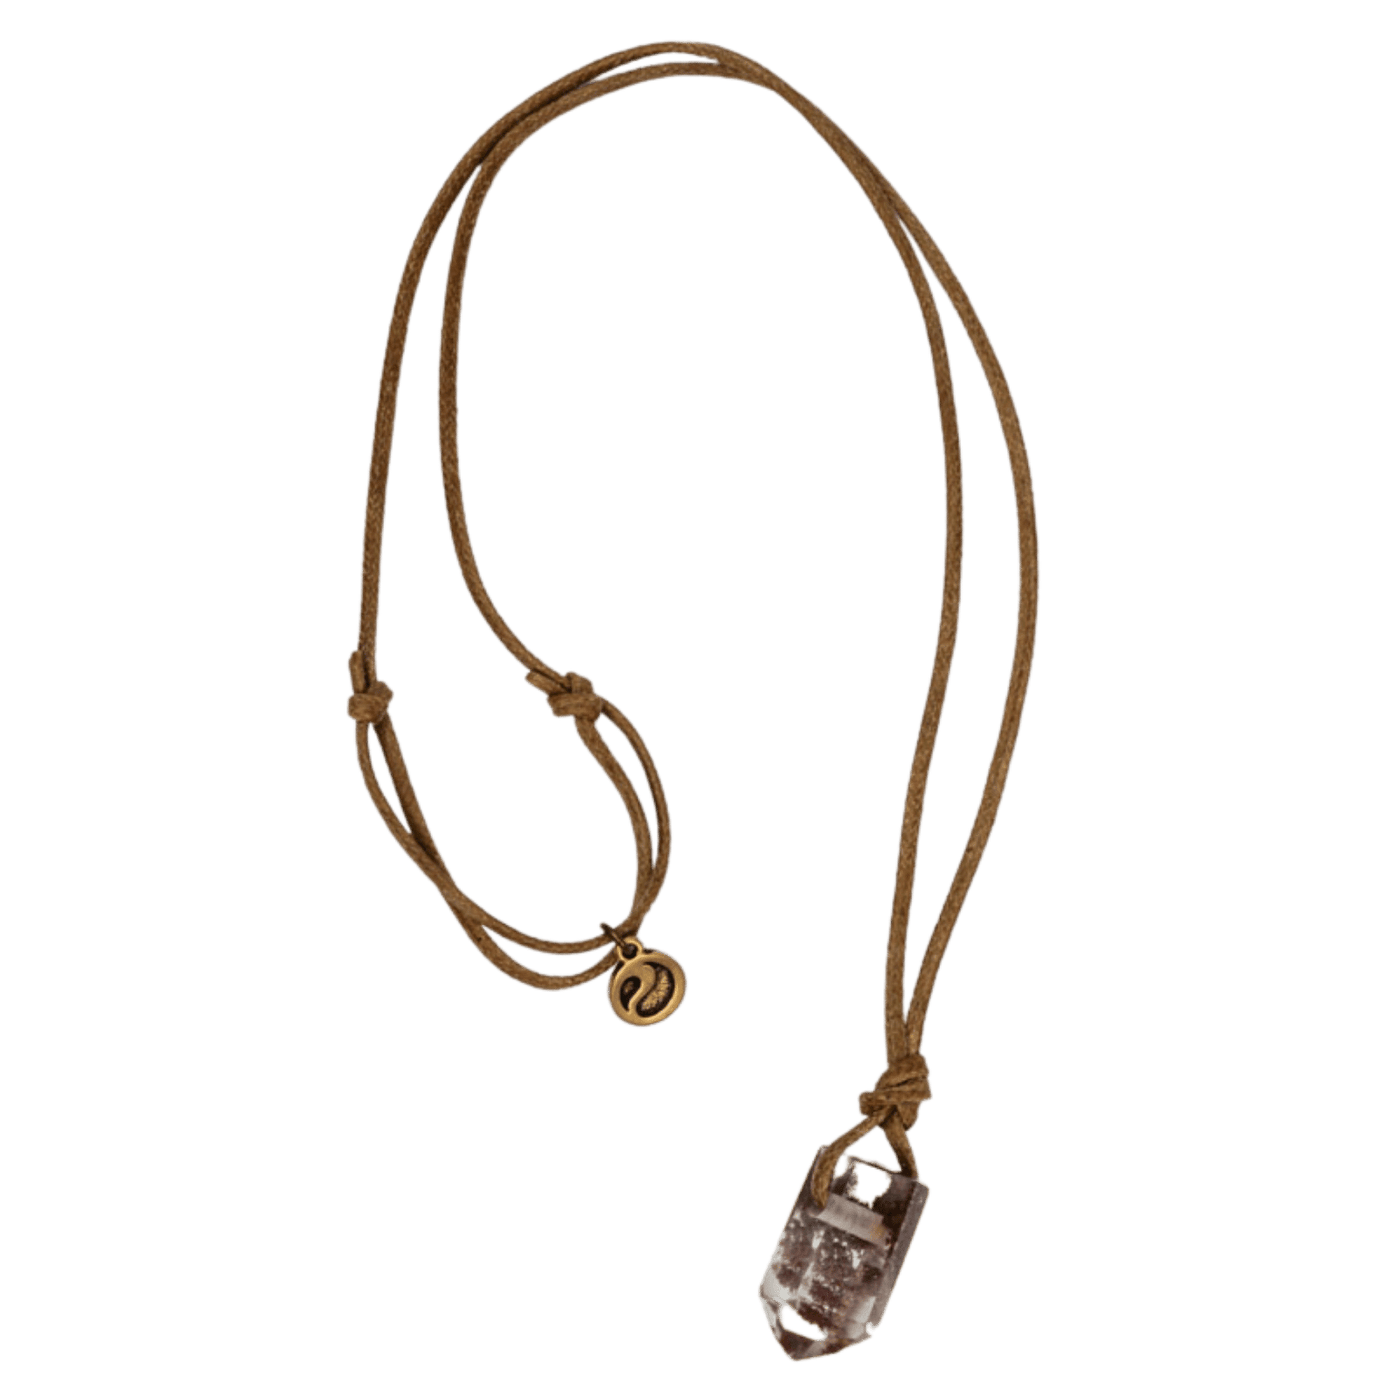 Included Quartz Pendant Adjustable Necklace